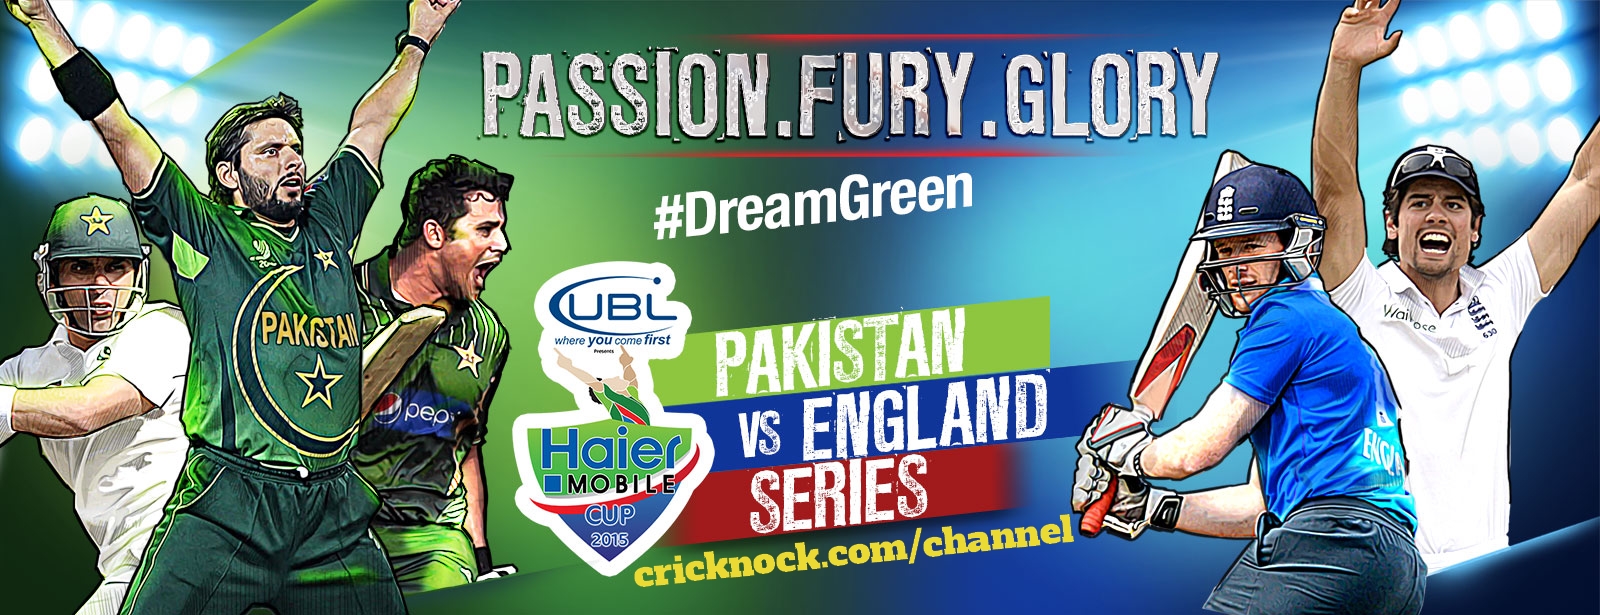 Pakistan vs England 2015